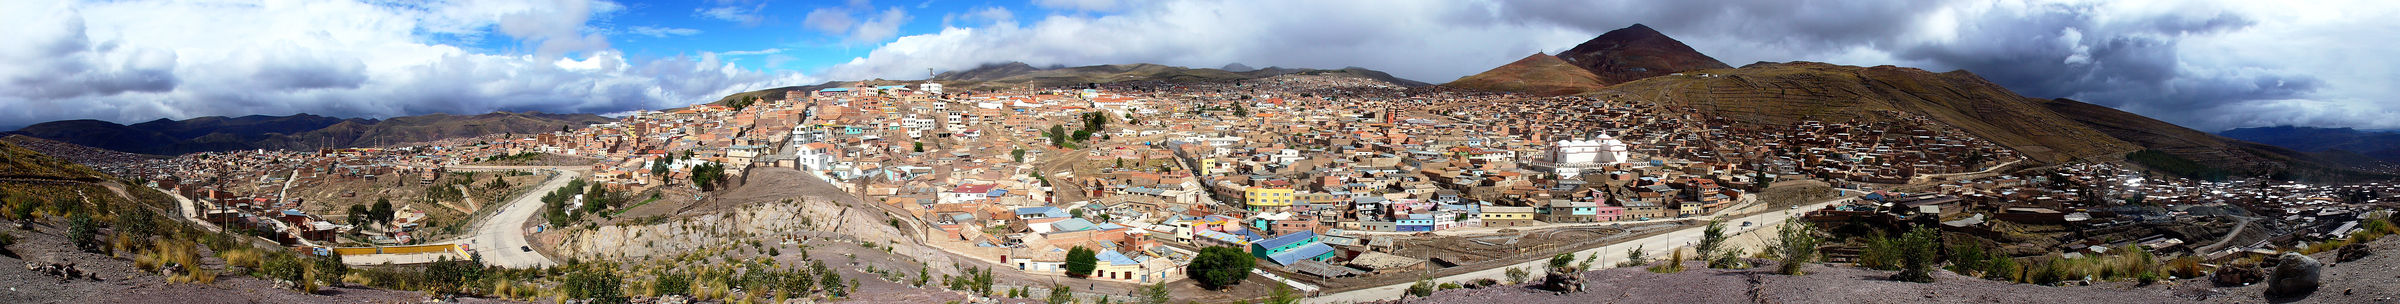 Panorama města Potosí